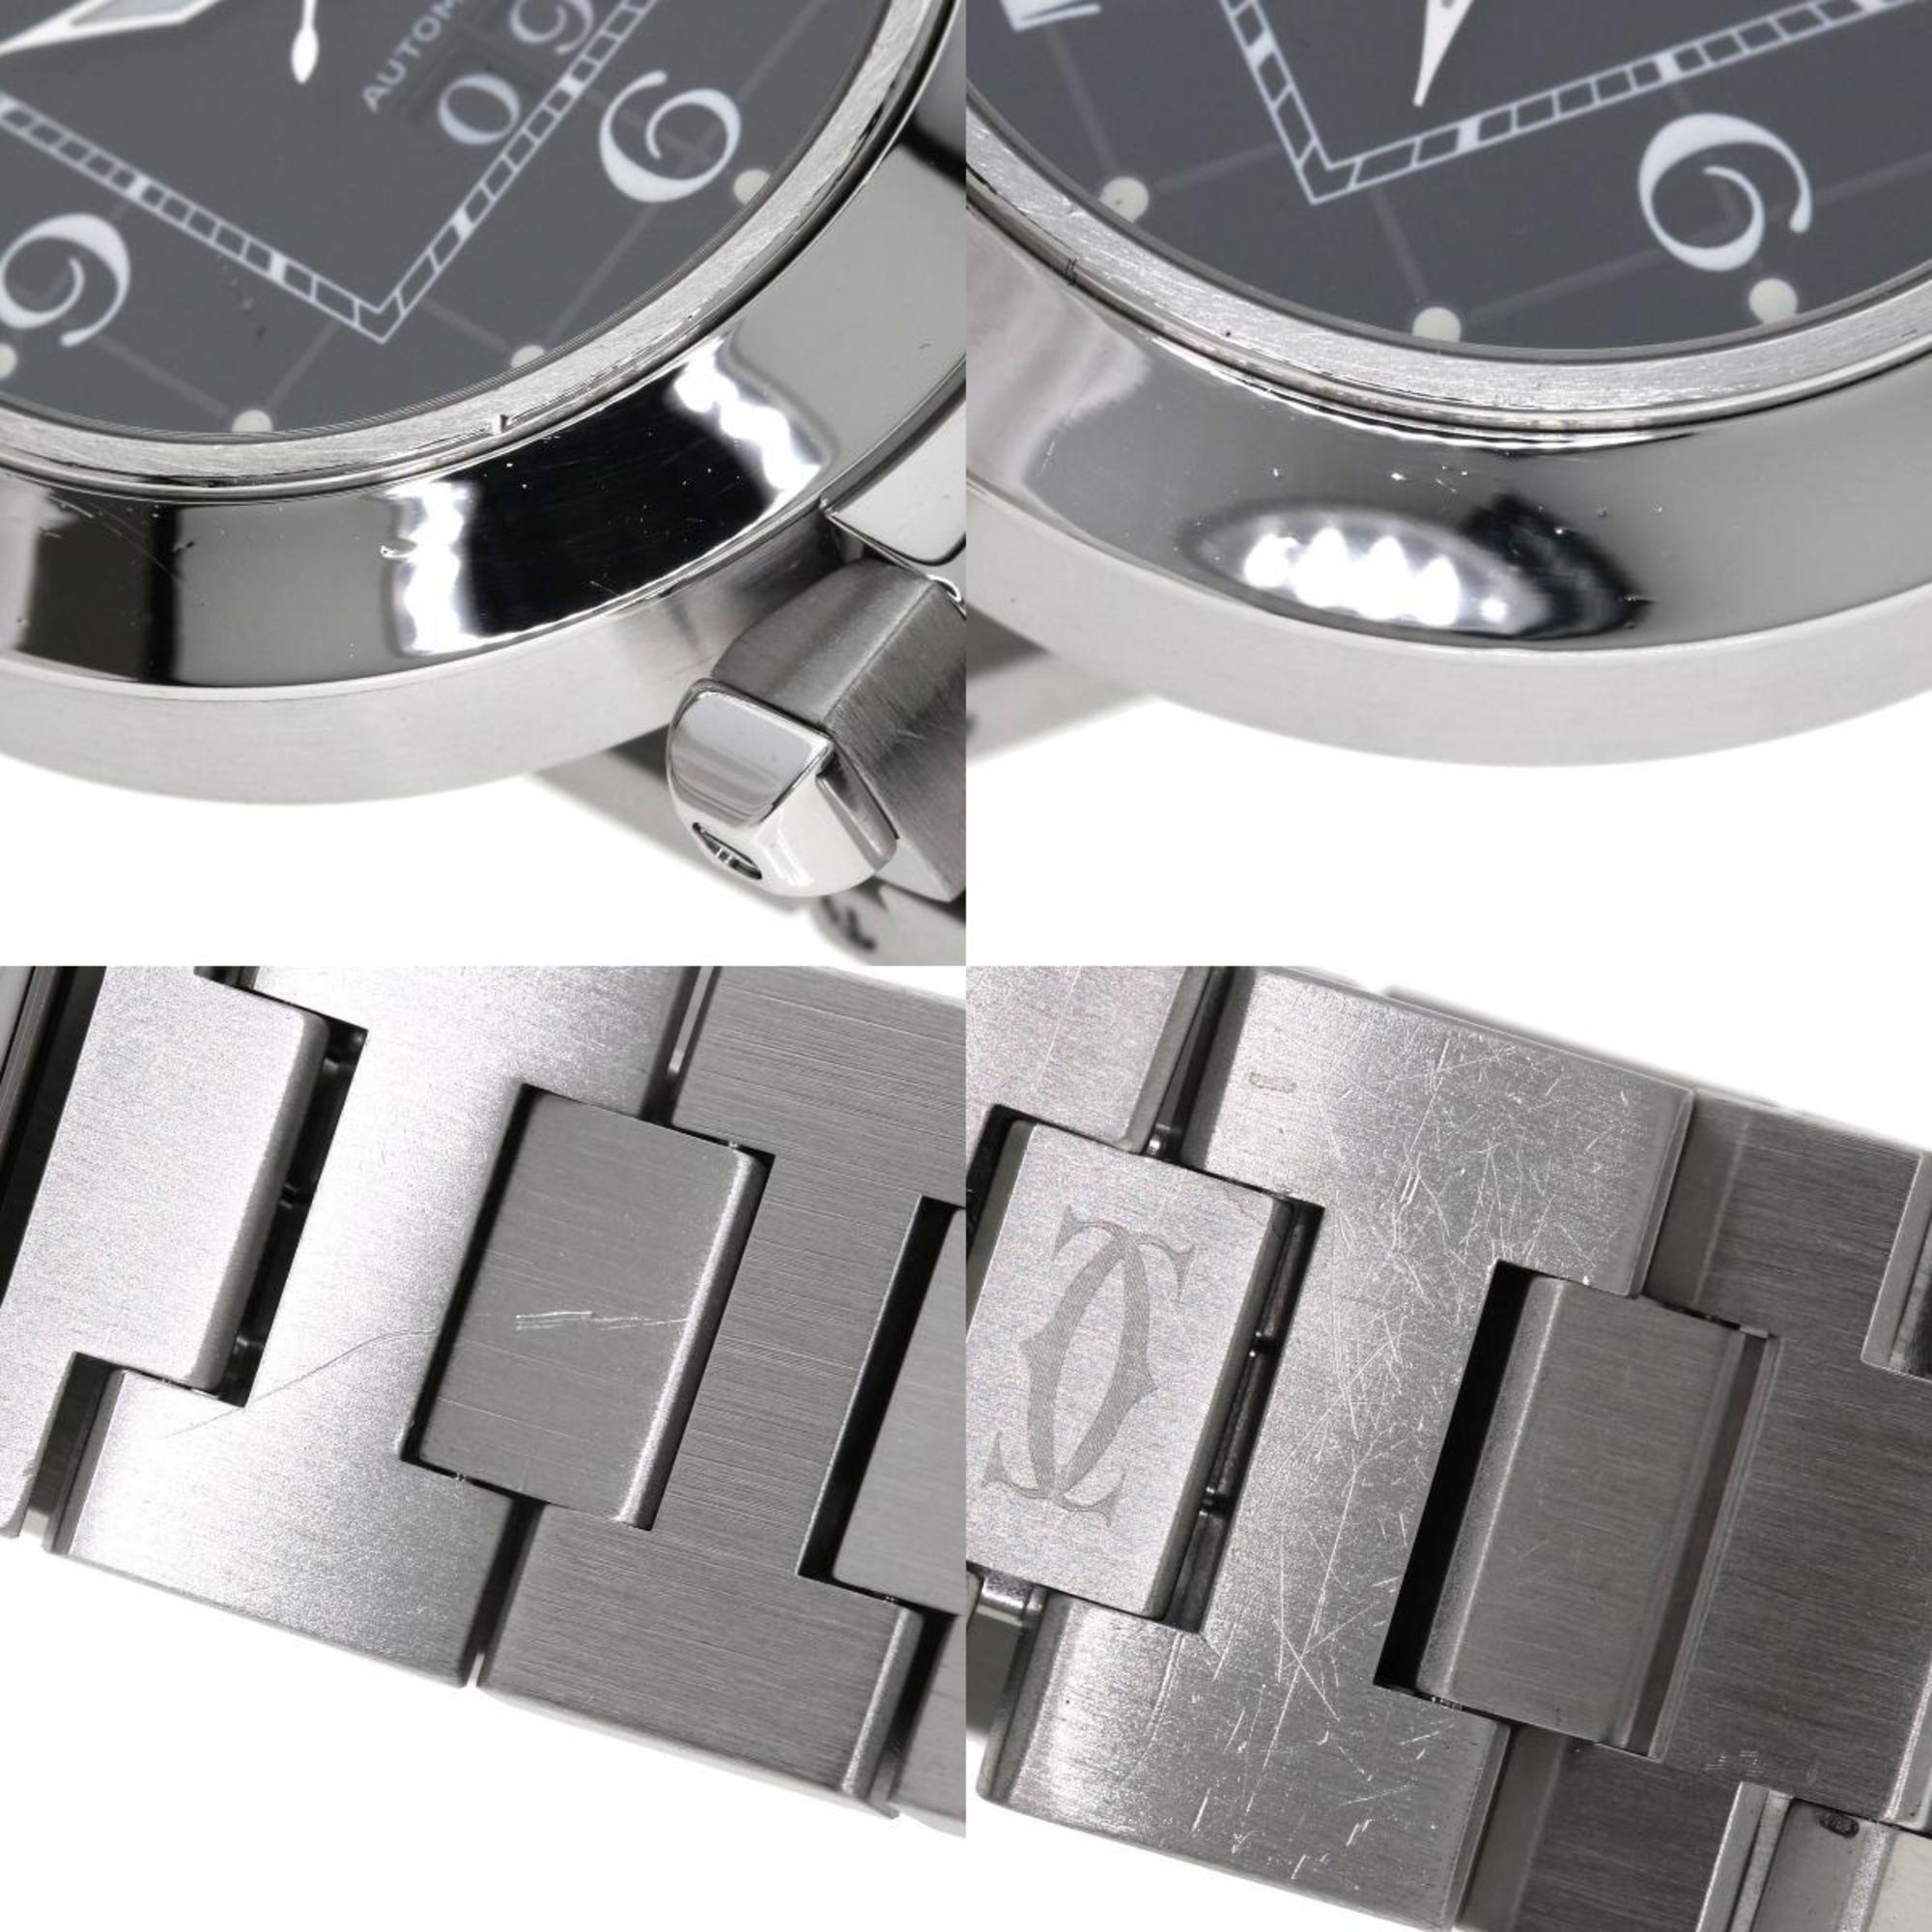 Cartier W31053M7 Pasha C Big Date Watch Stainless Steel SS Men's